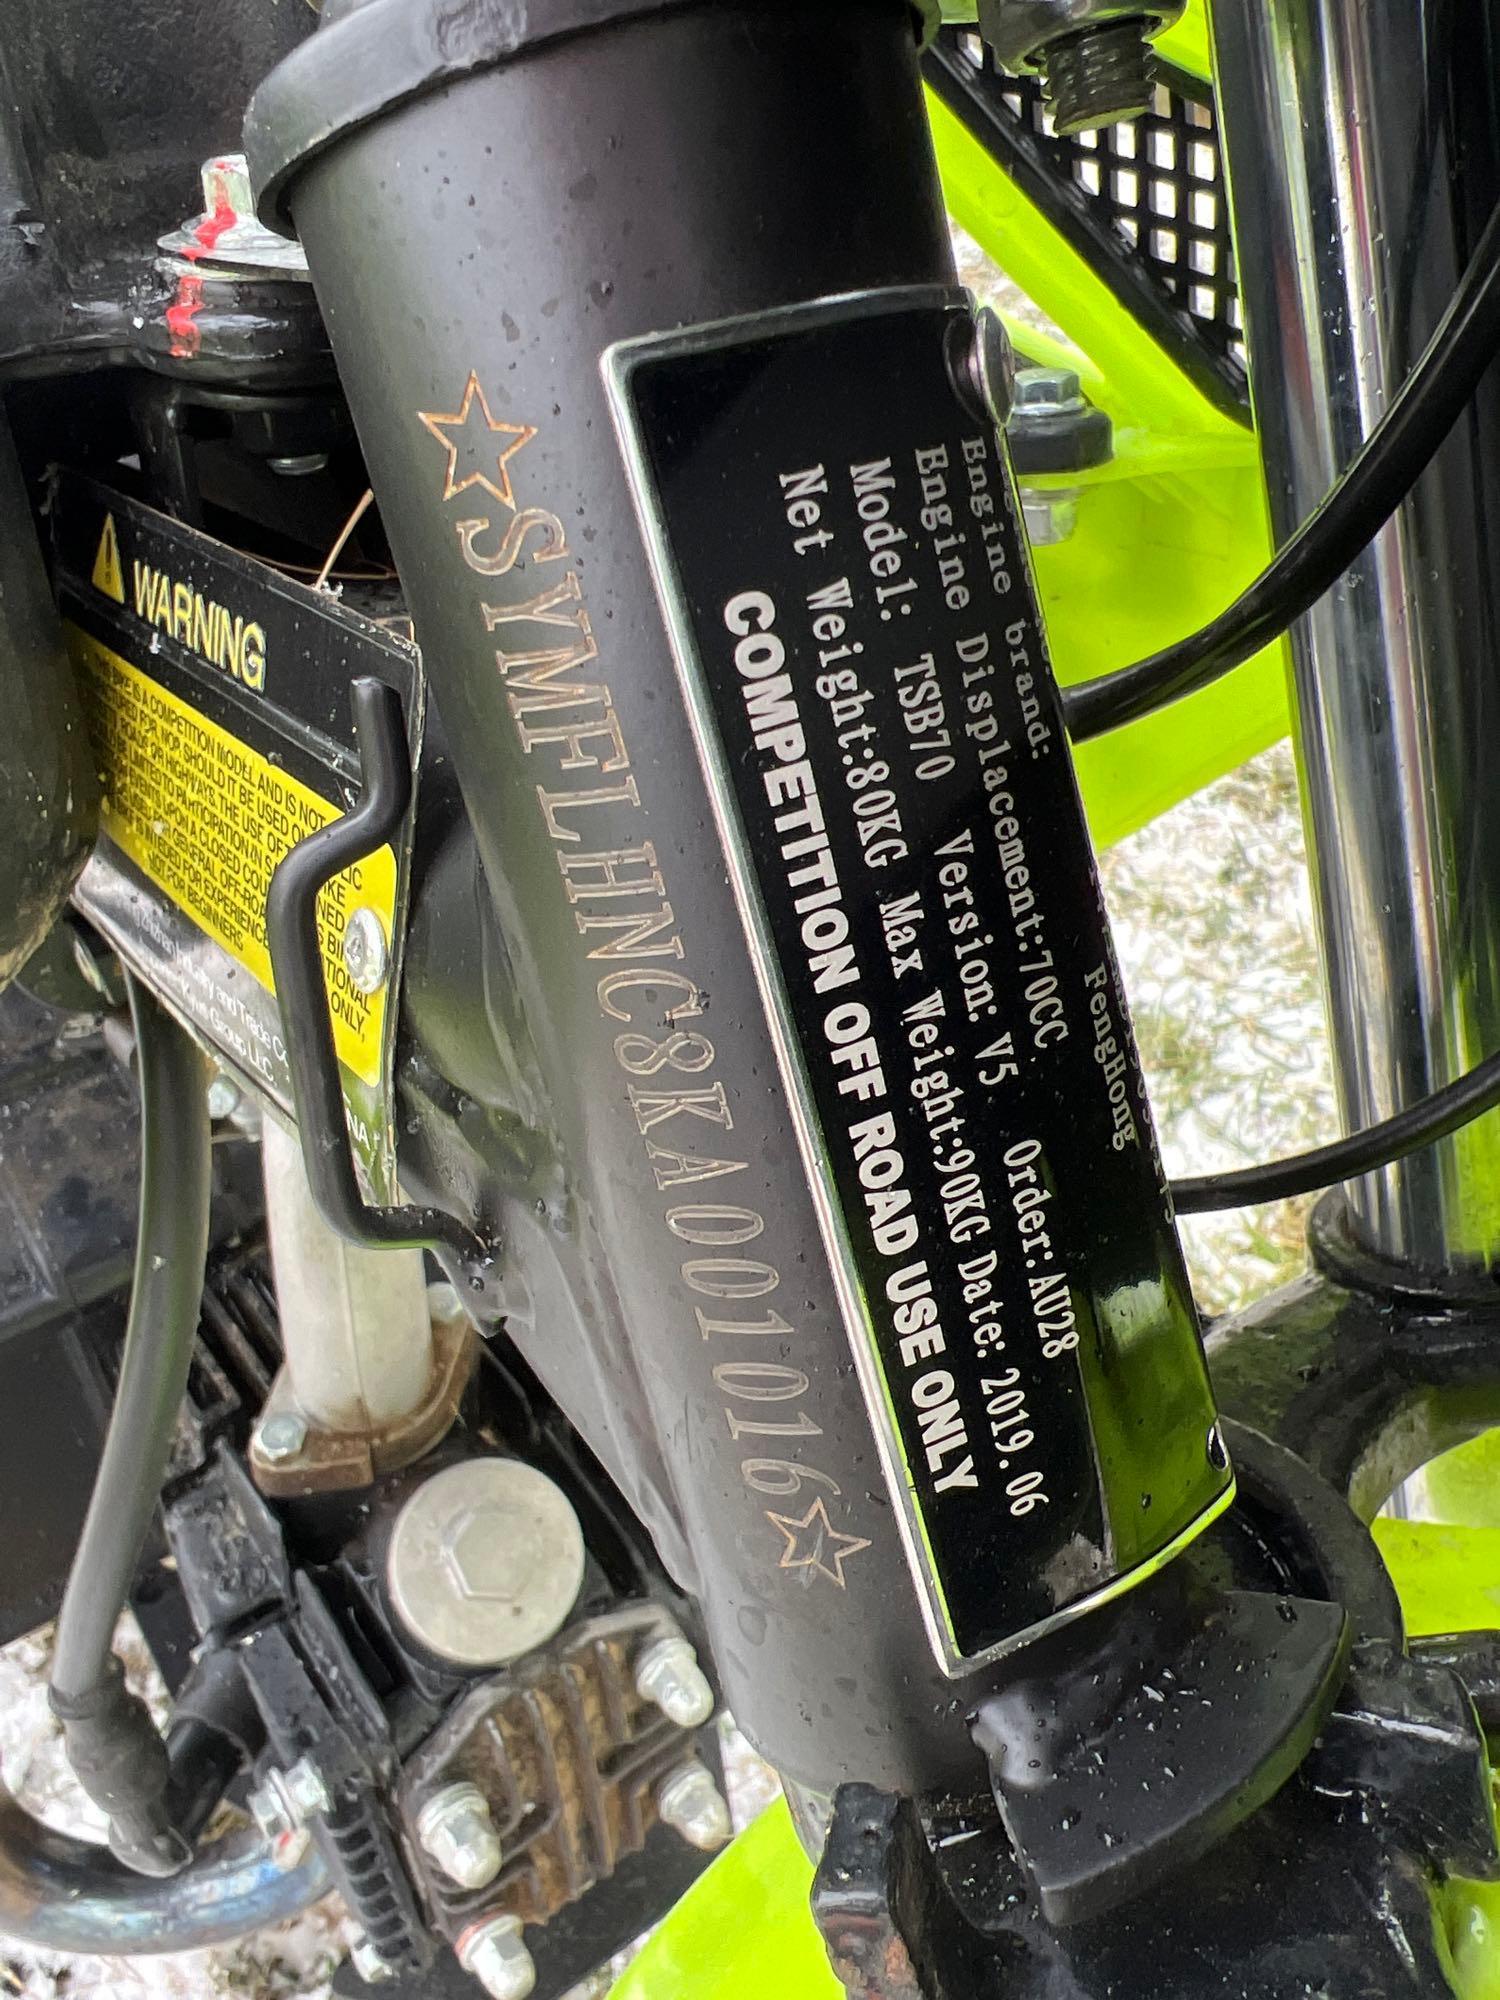 2019 Thumpstar Dirt Bike 70cc